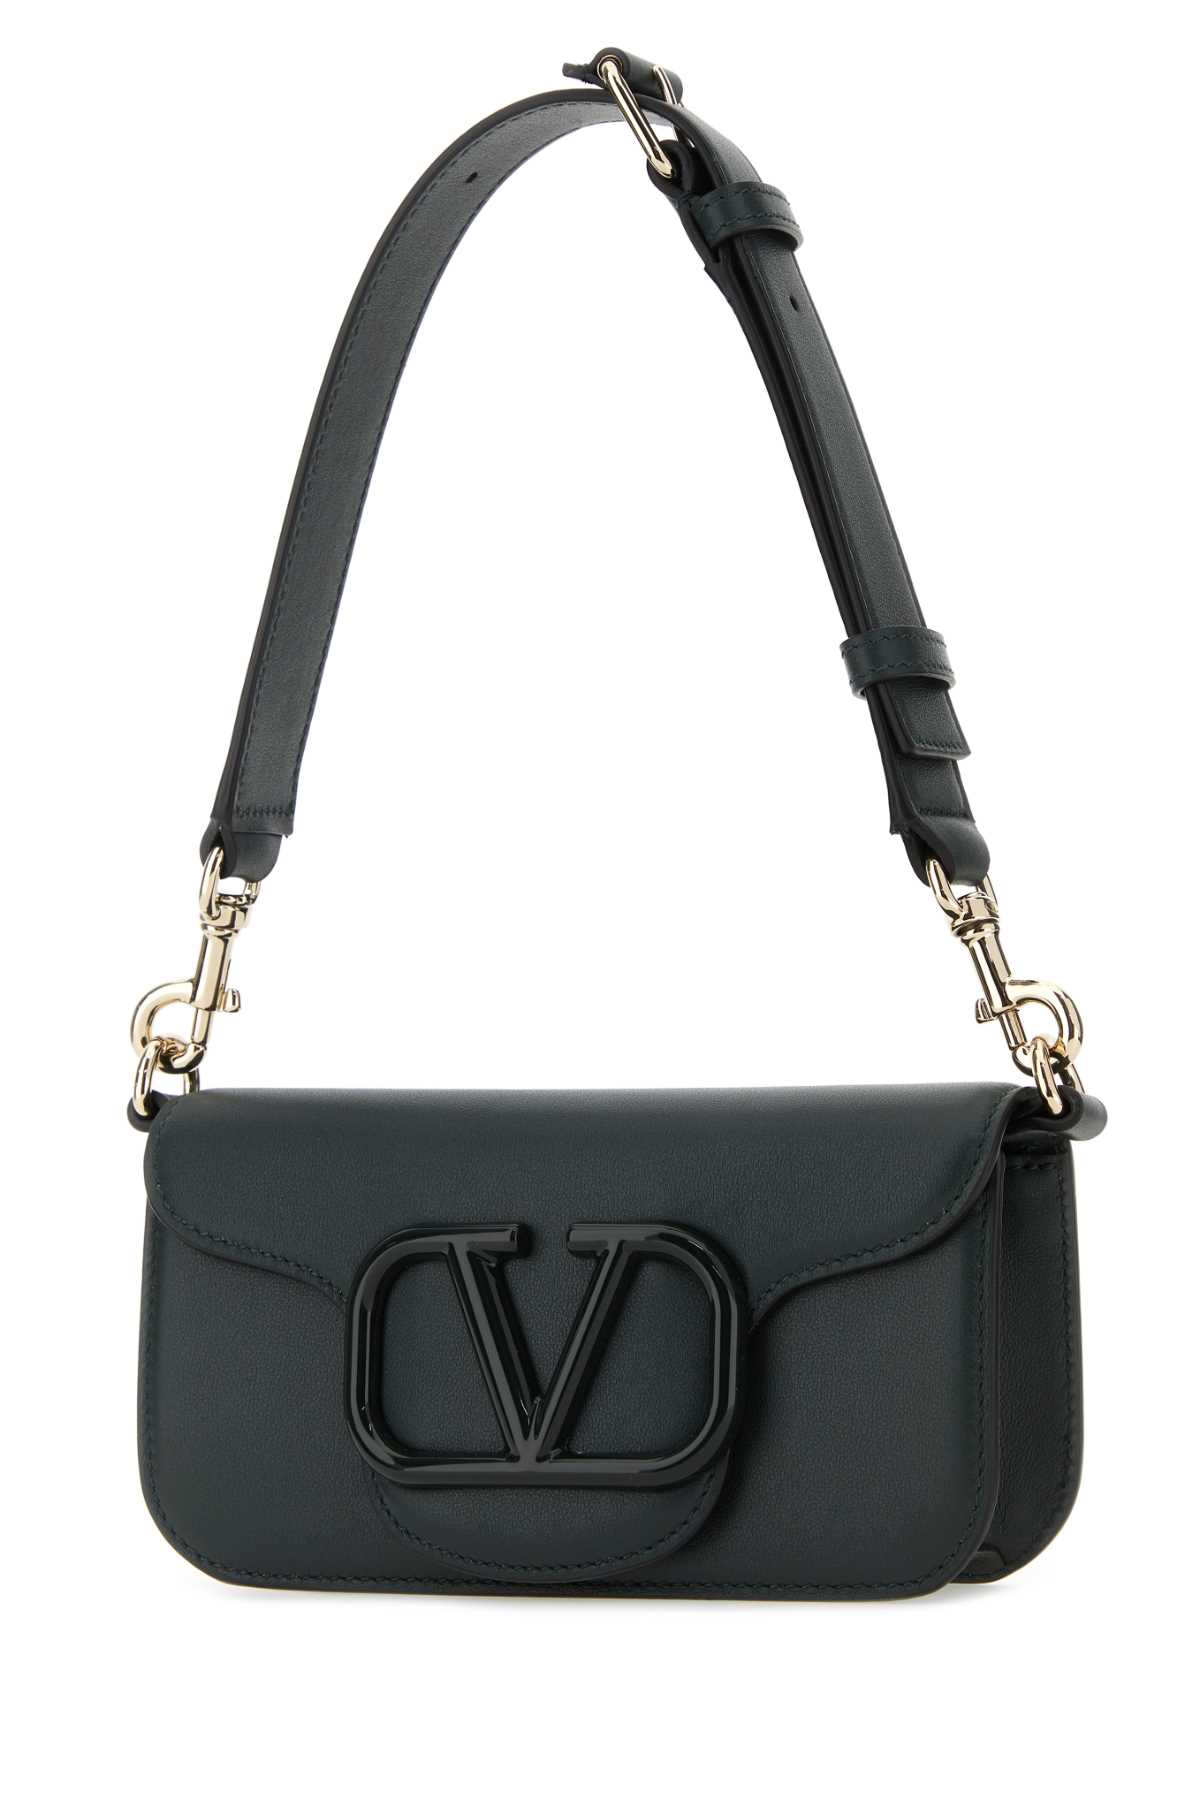 Valentino Garavani Dark Green Leather Mini Locã² Shoulder Bag In Mountainview